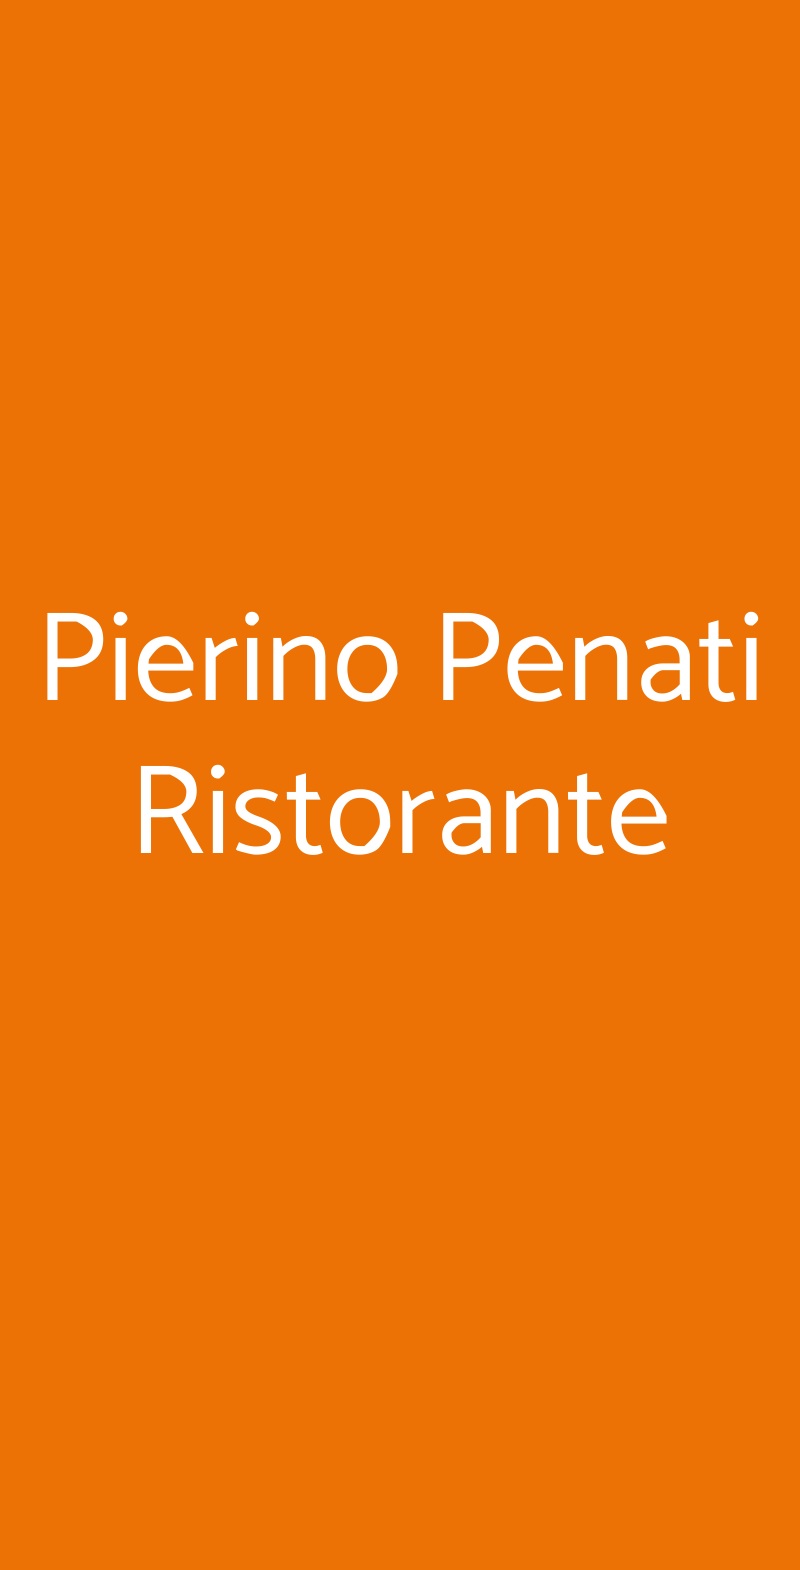 Pierino Penati Ristorante Viganò menù 1 pagina